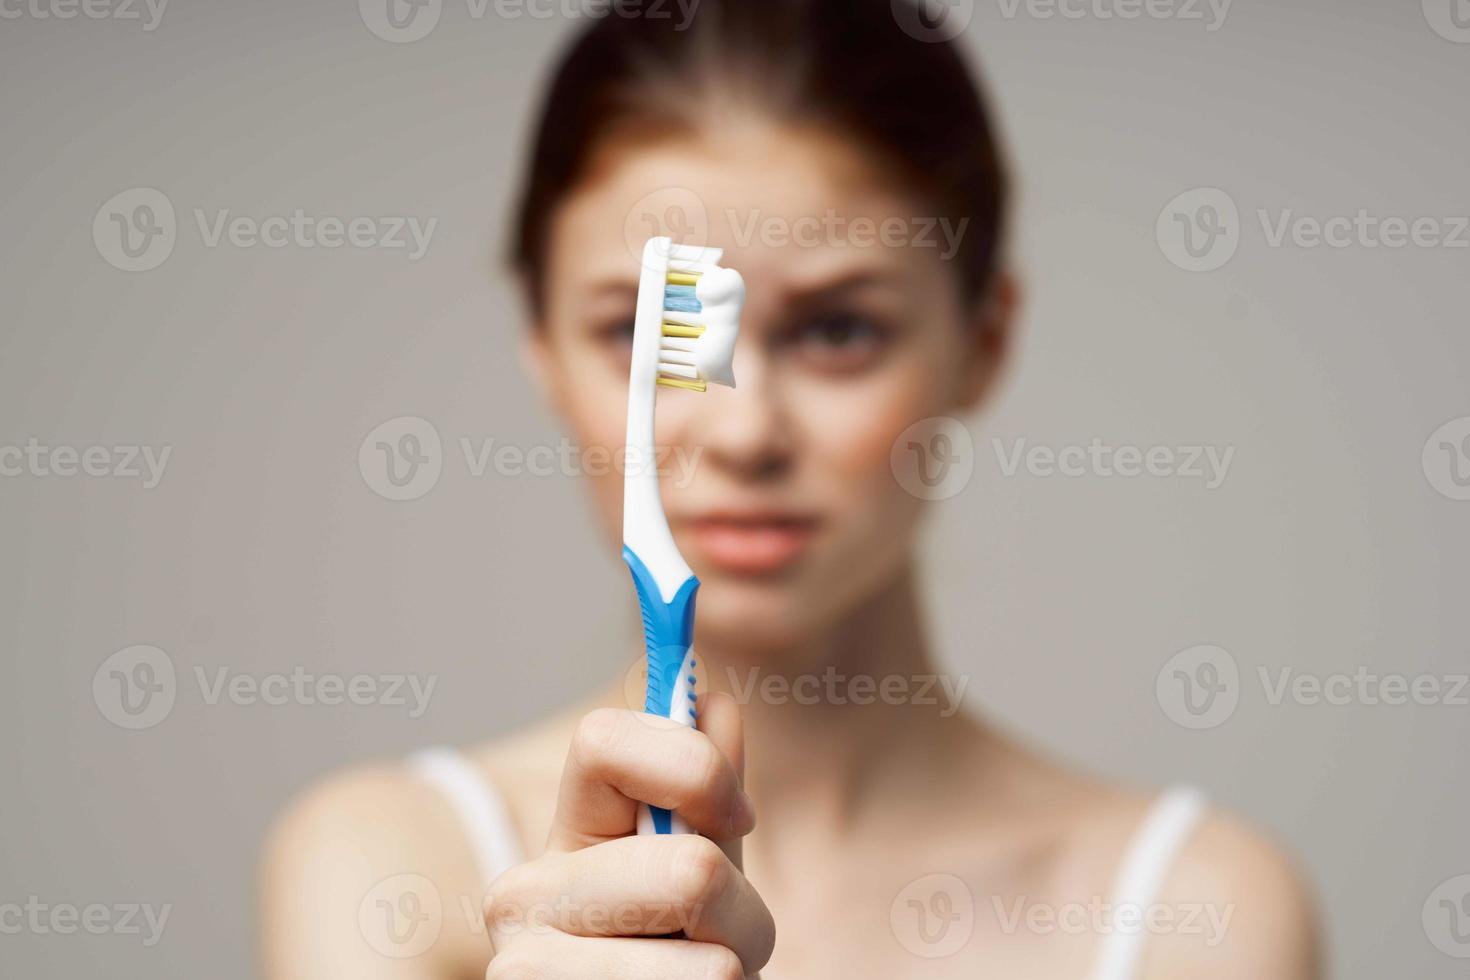 alegre mulher dentro branco camiseta dental higiene saúde Cuidado isolado fundo foto